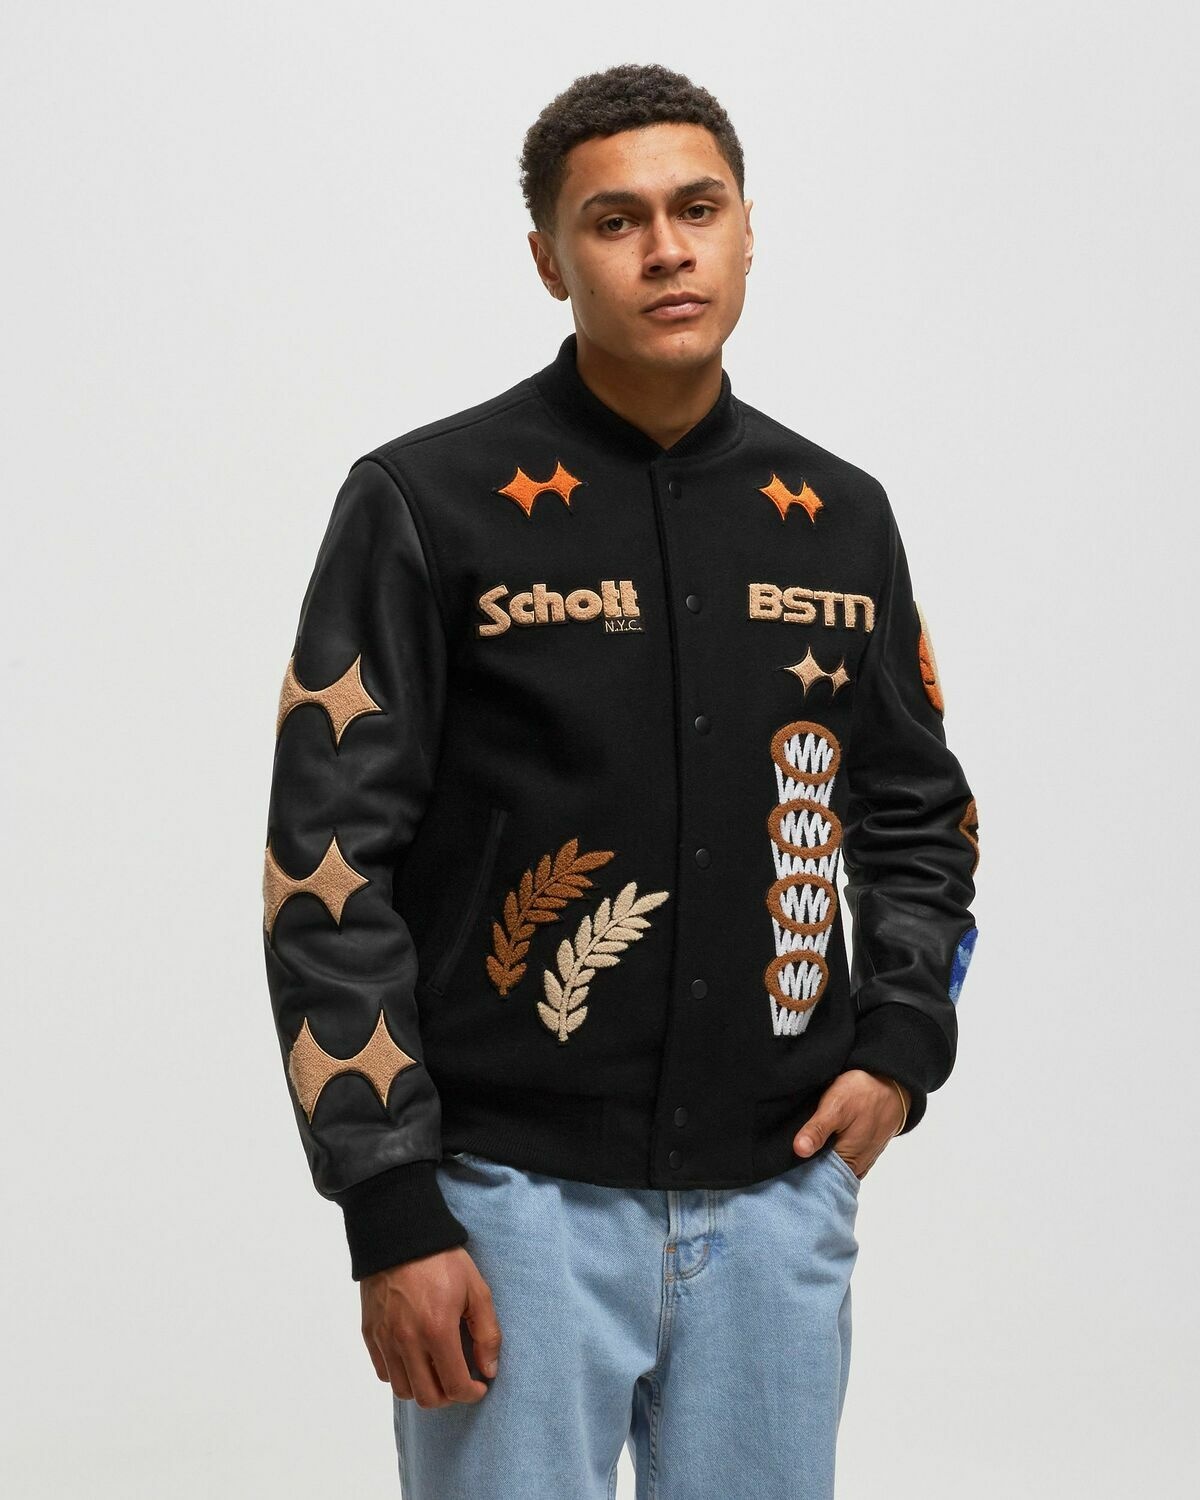 Bstn Brand Schott X Bstn Brand Thank You, Basketball Varsity Jacket Black/Multi - Mens - College Jackets